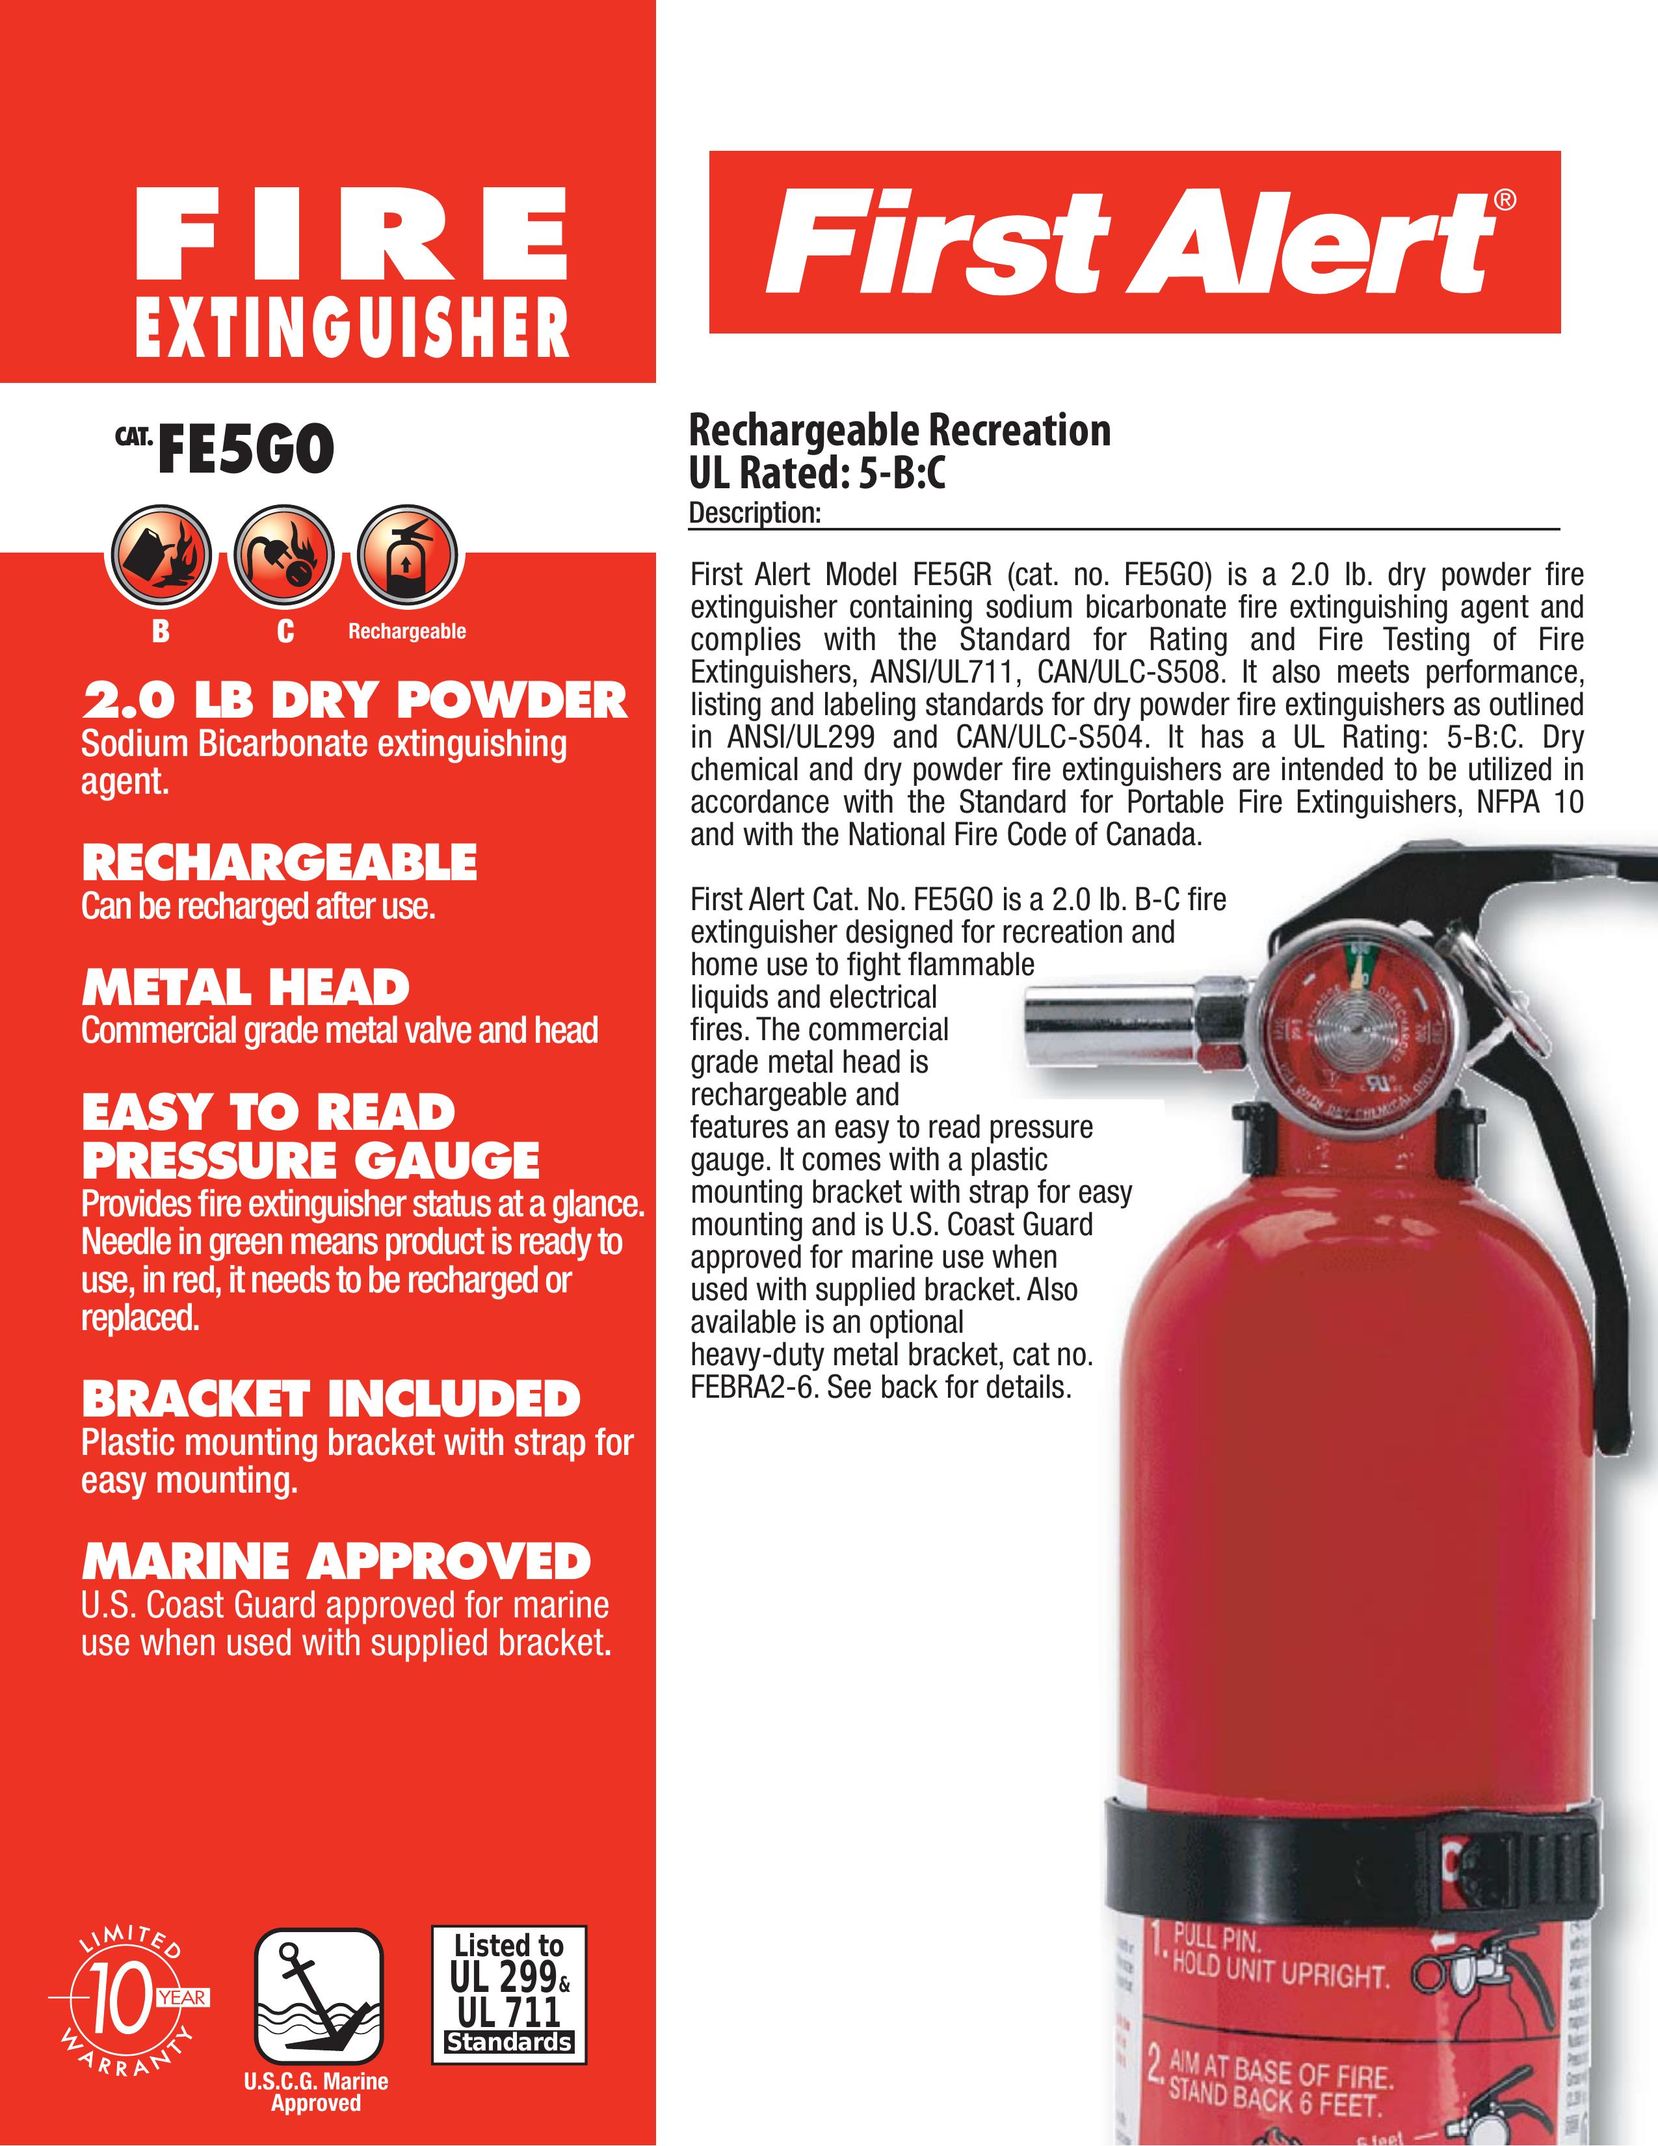 First Alert FE5GO Fire Extinguisher User Manual